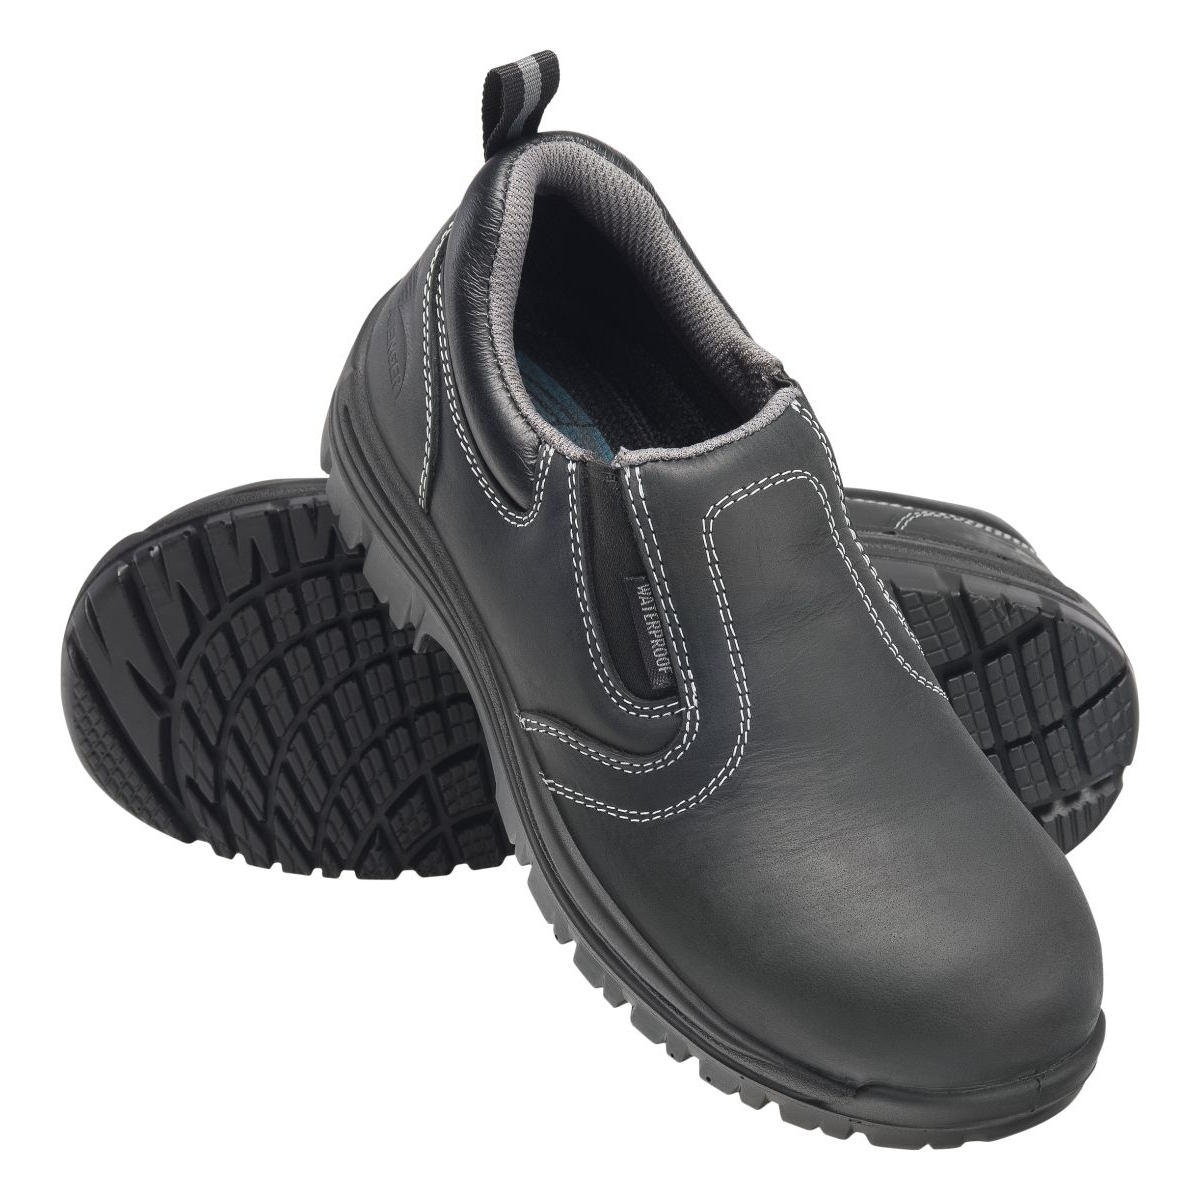 FSI FOOTWEAR SPECIALTIES INTERNATIONAL NAUTILUS Avenger Women's Foreman Slip-On Composite Toe PR Work Shoes Black - A7169 - BLACK, 8.5-M